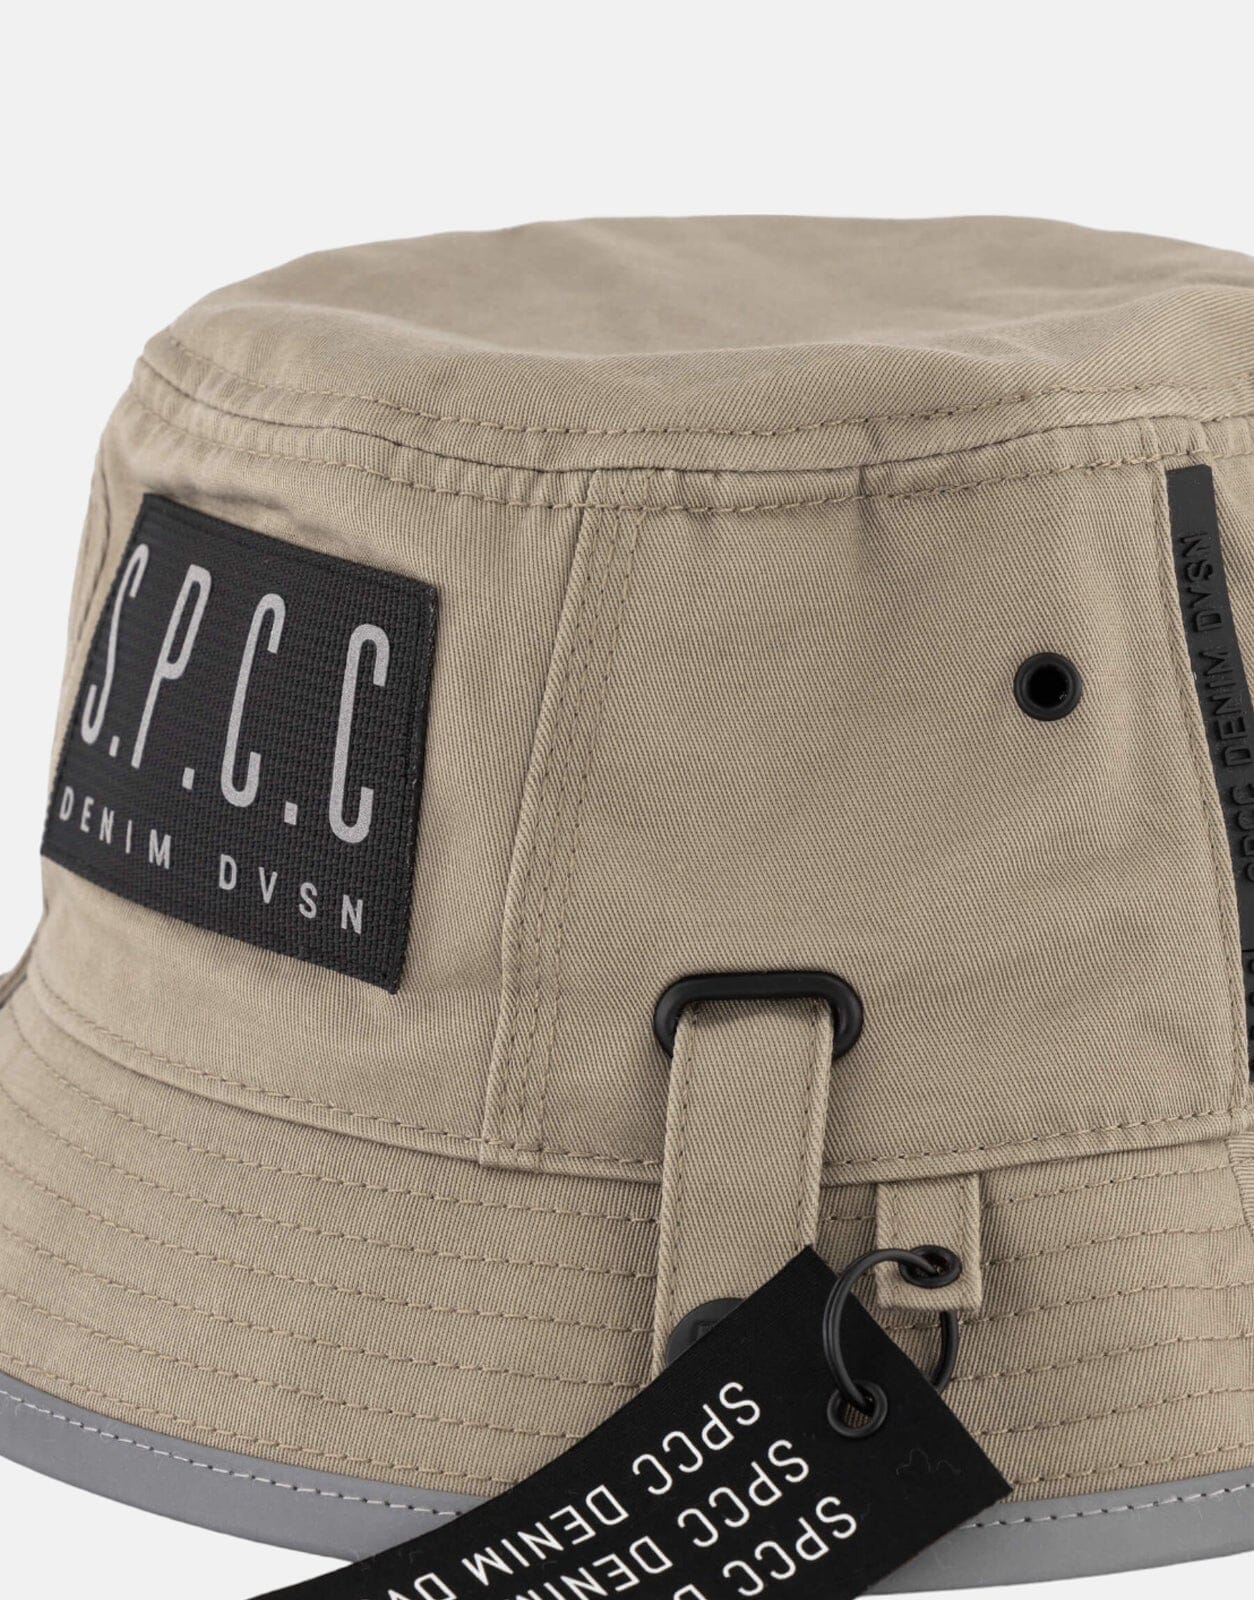 SPCC Ferrera Stone Bucket Hat - Subwear